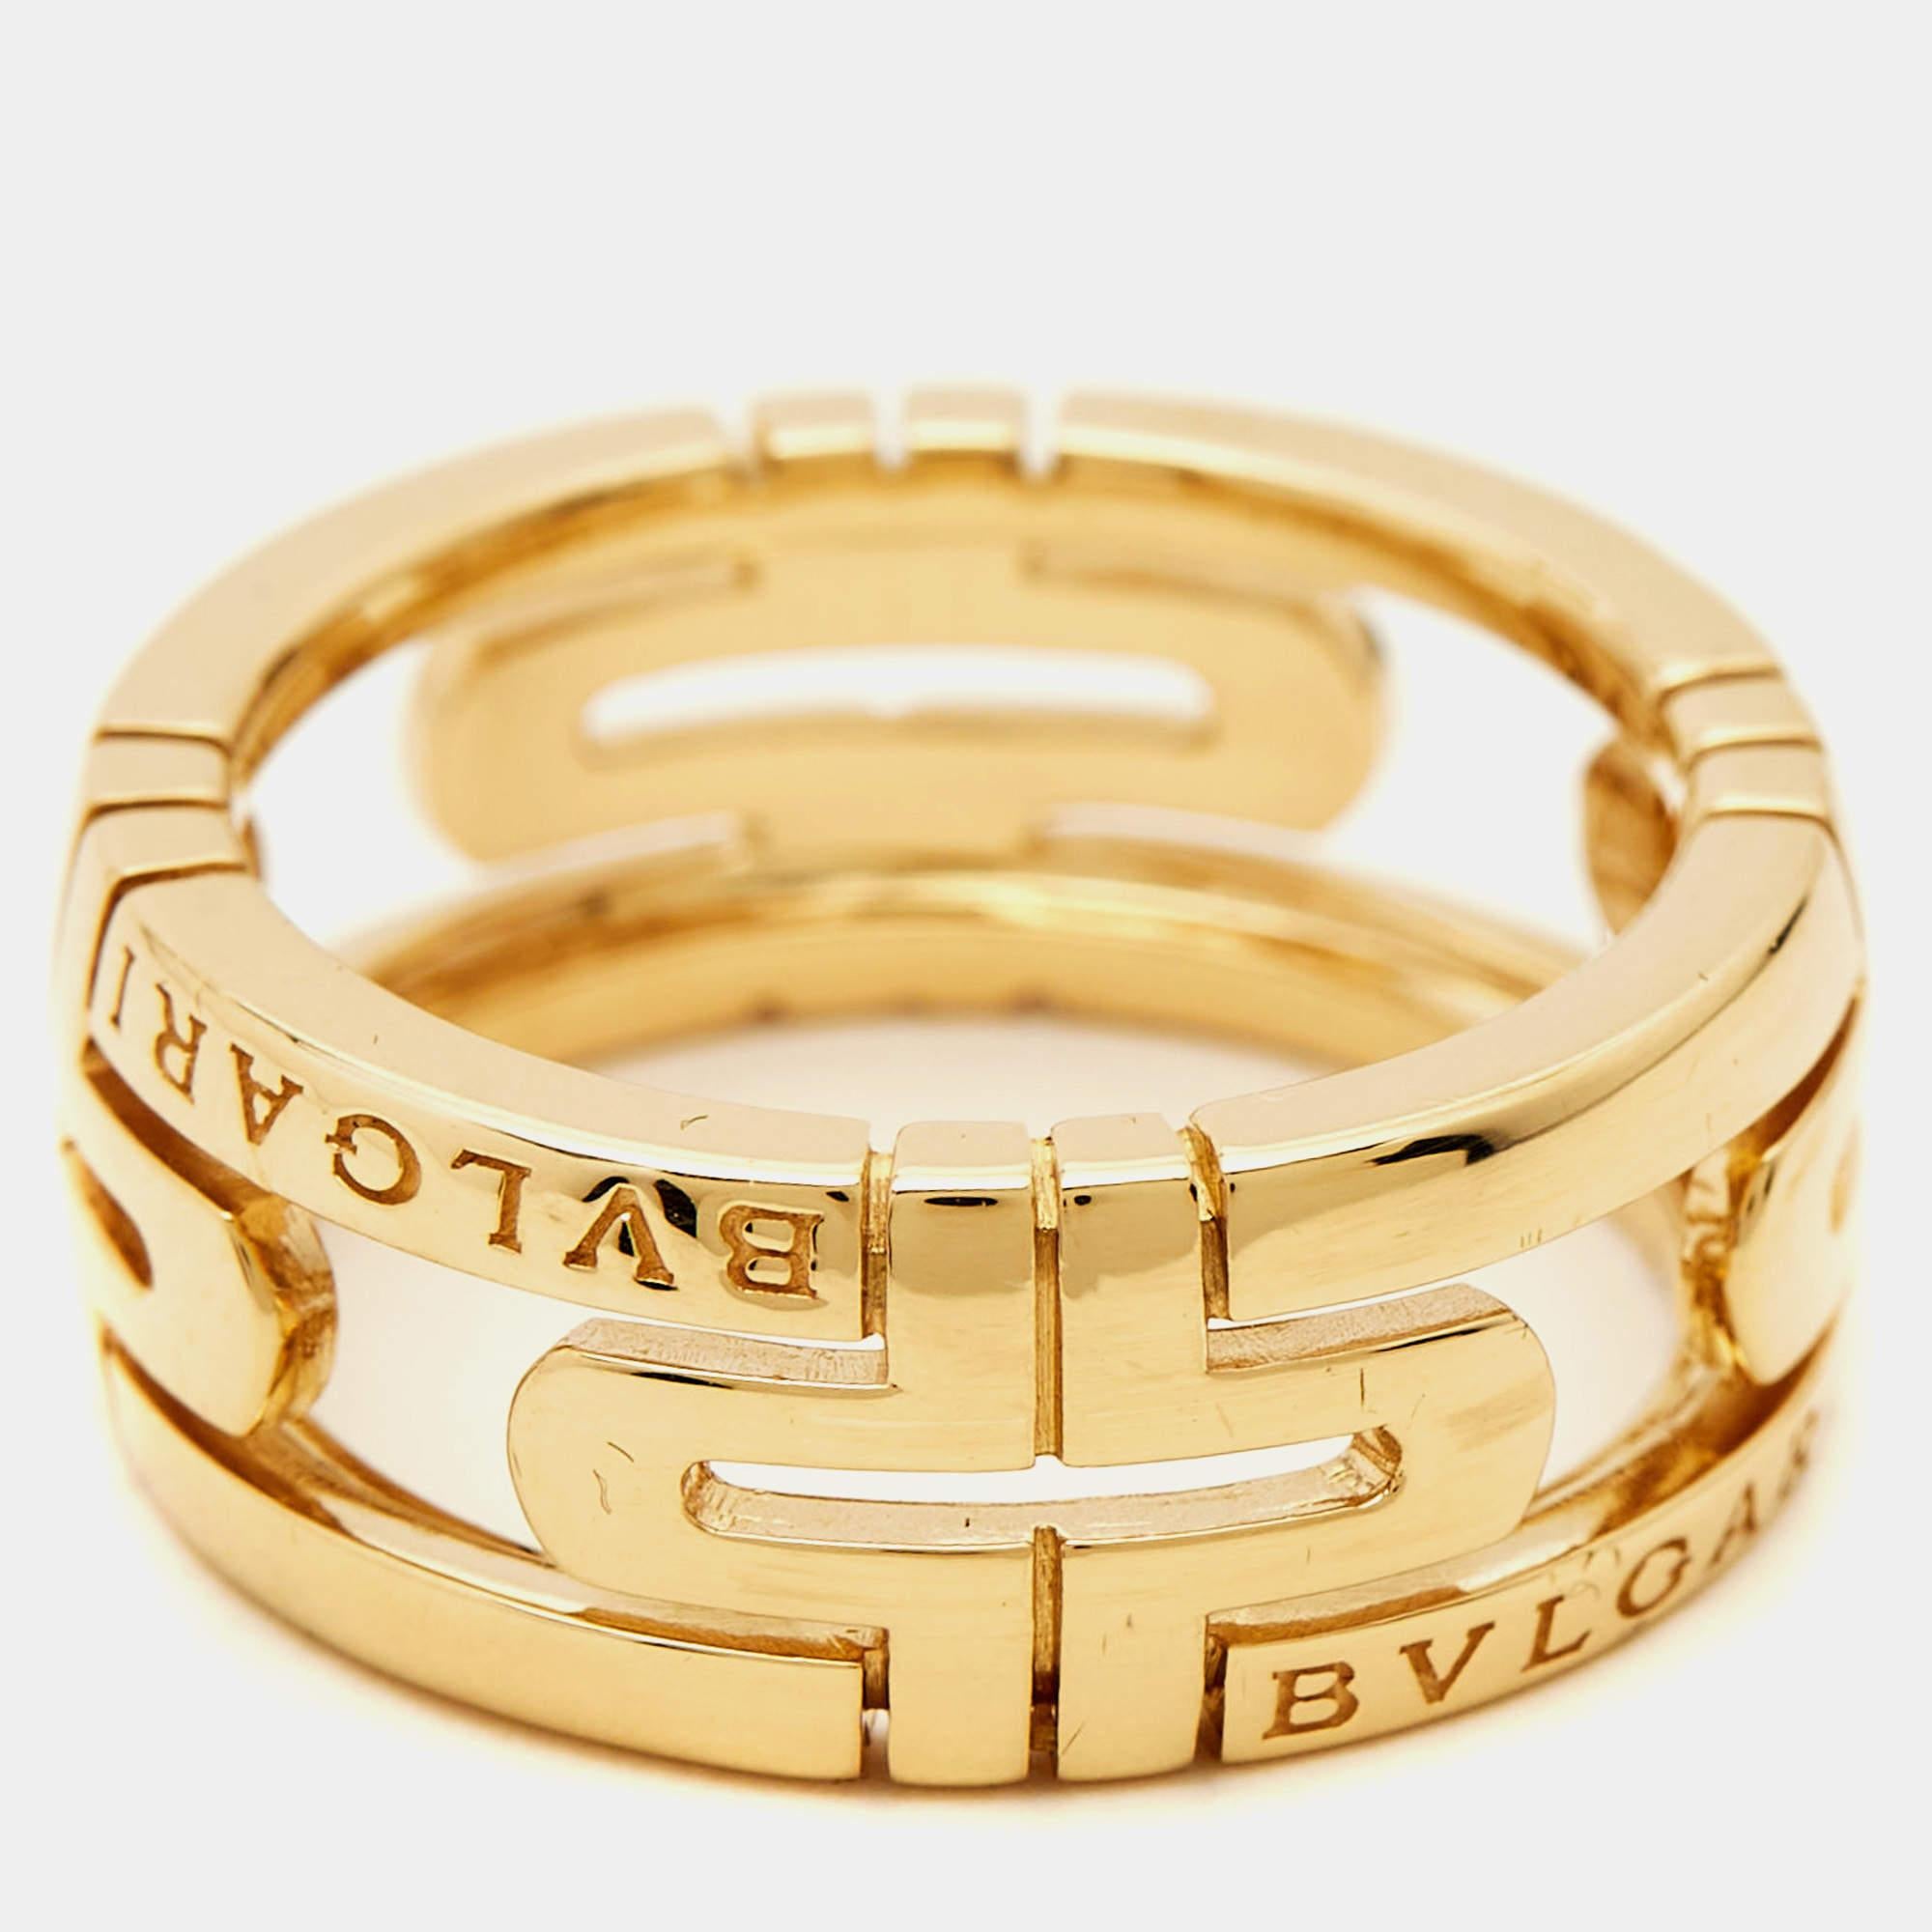 Aesthetic Movement Bvlgari Parentesi 18k Yellow Gold Ring Size 52